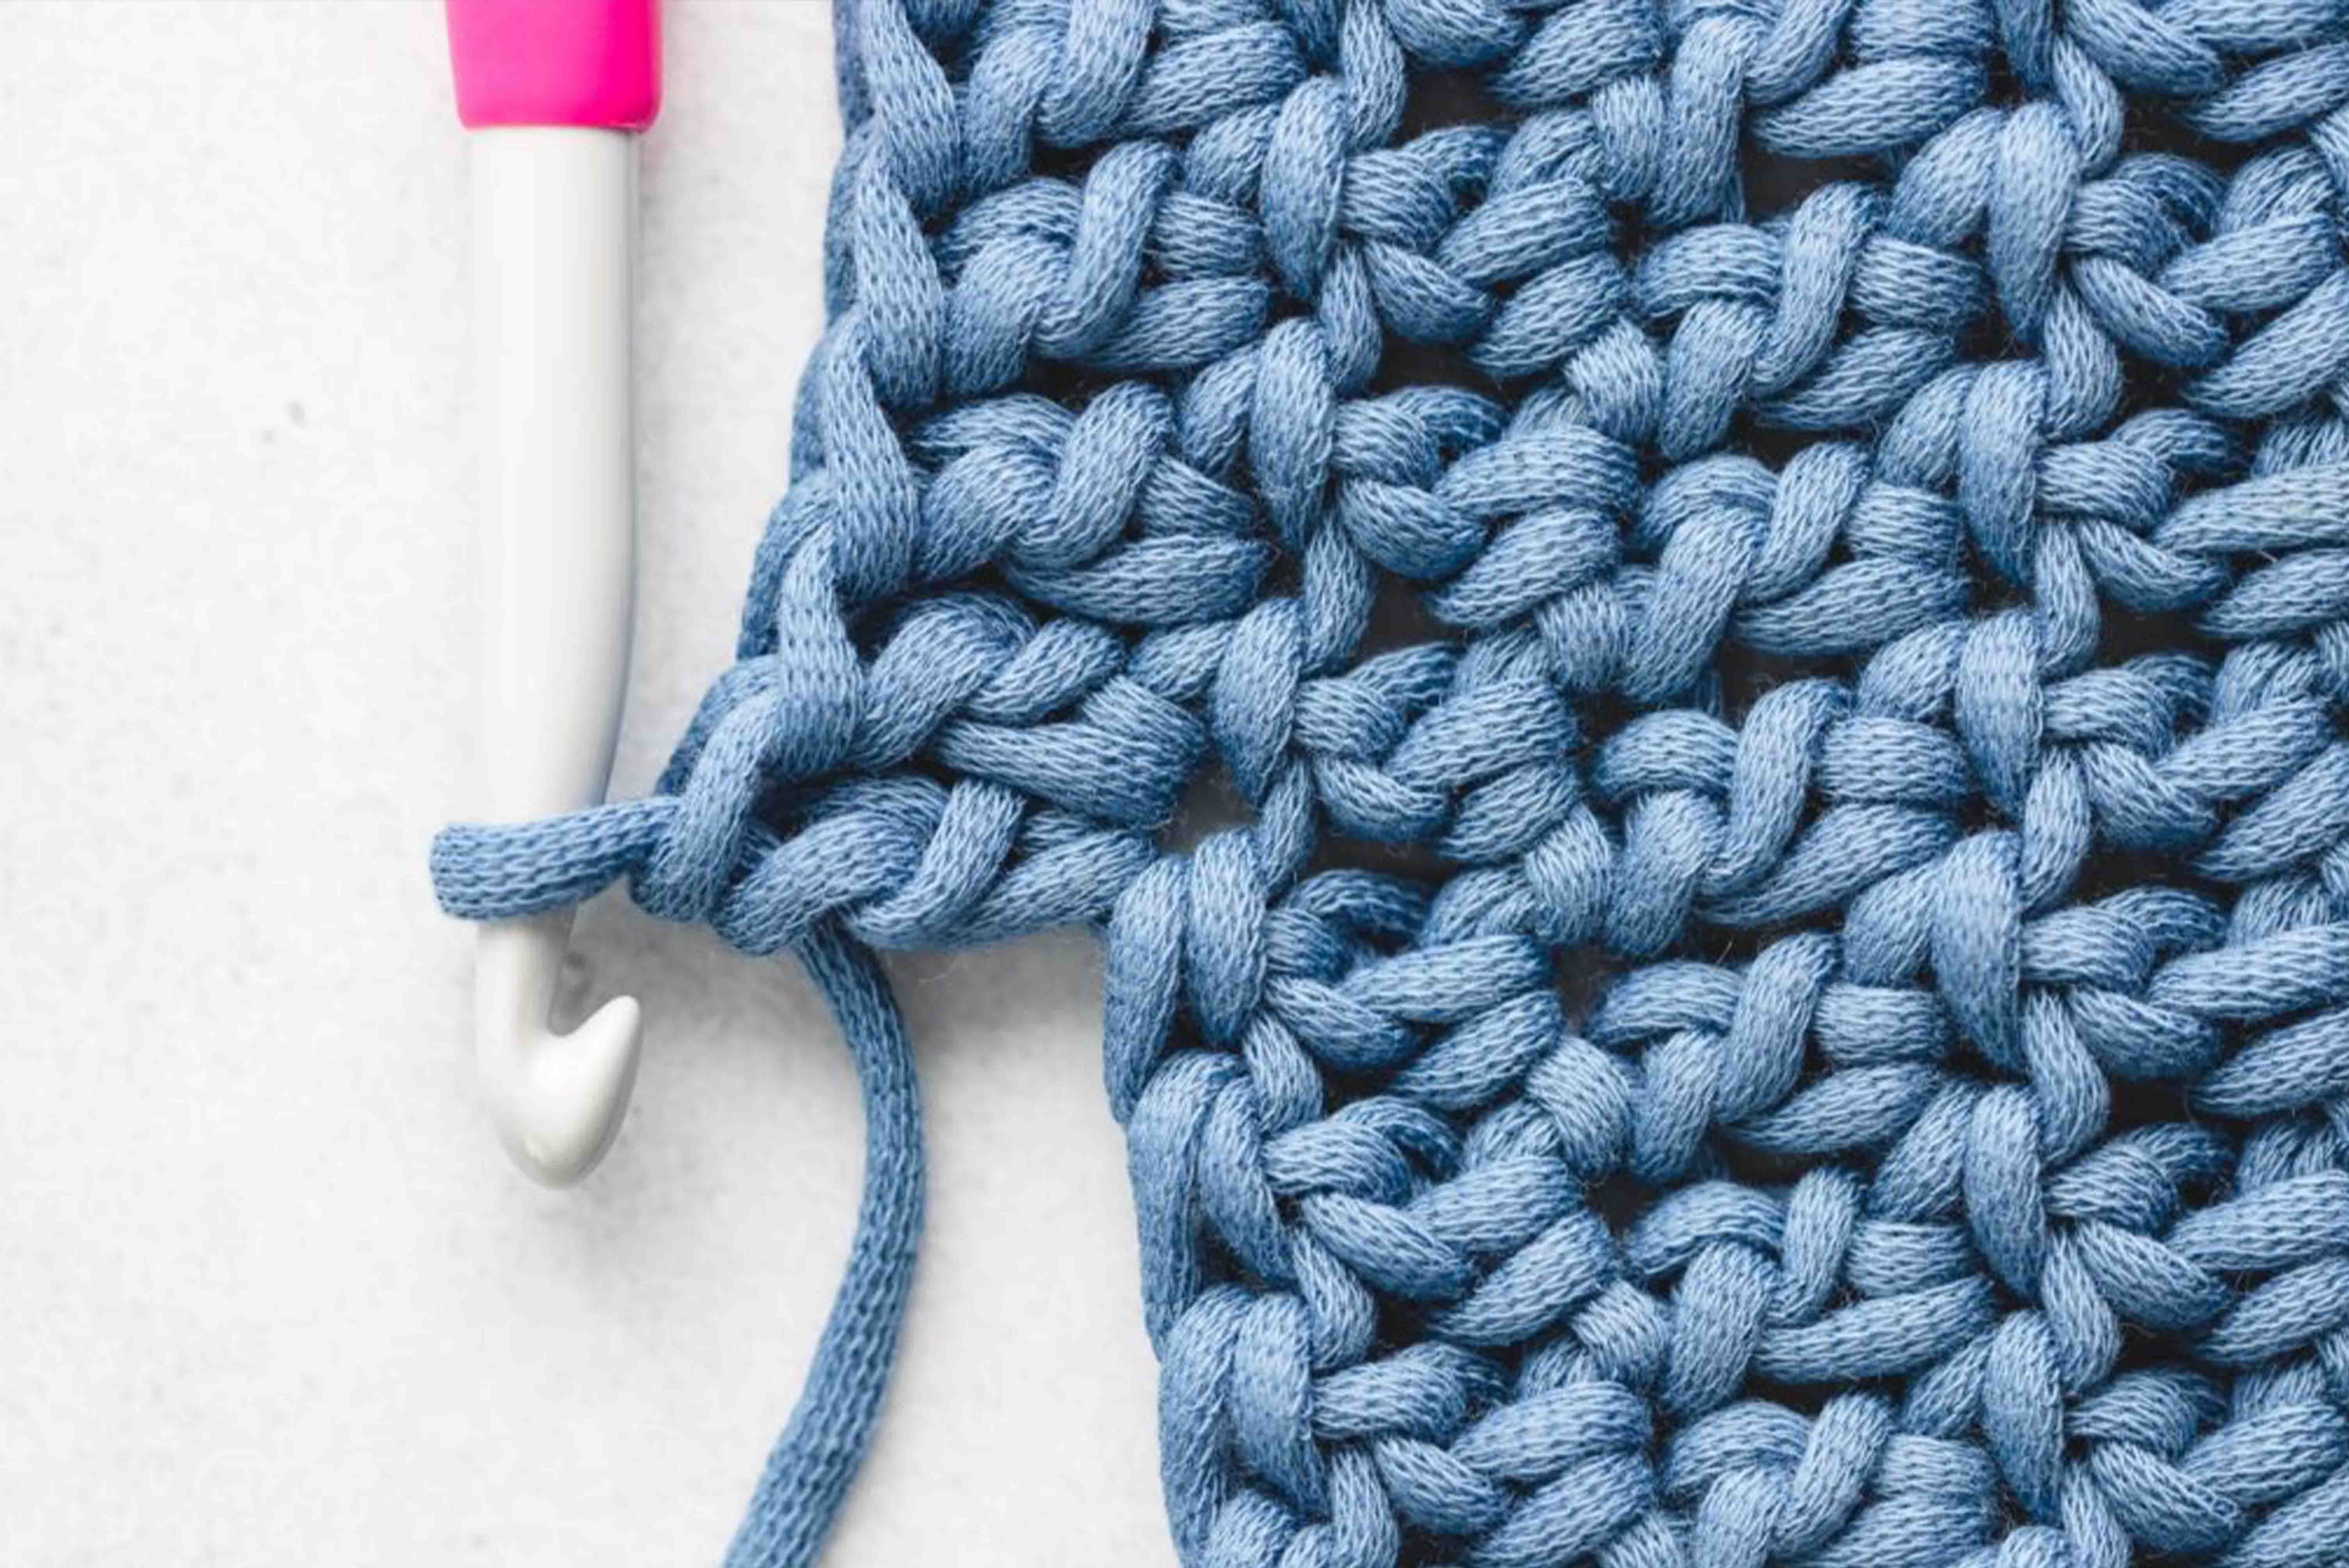 Nylon Thread and Crochet Hook from Handmade-Spinus